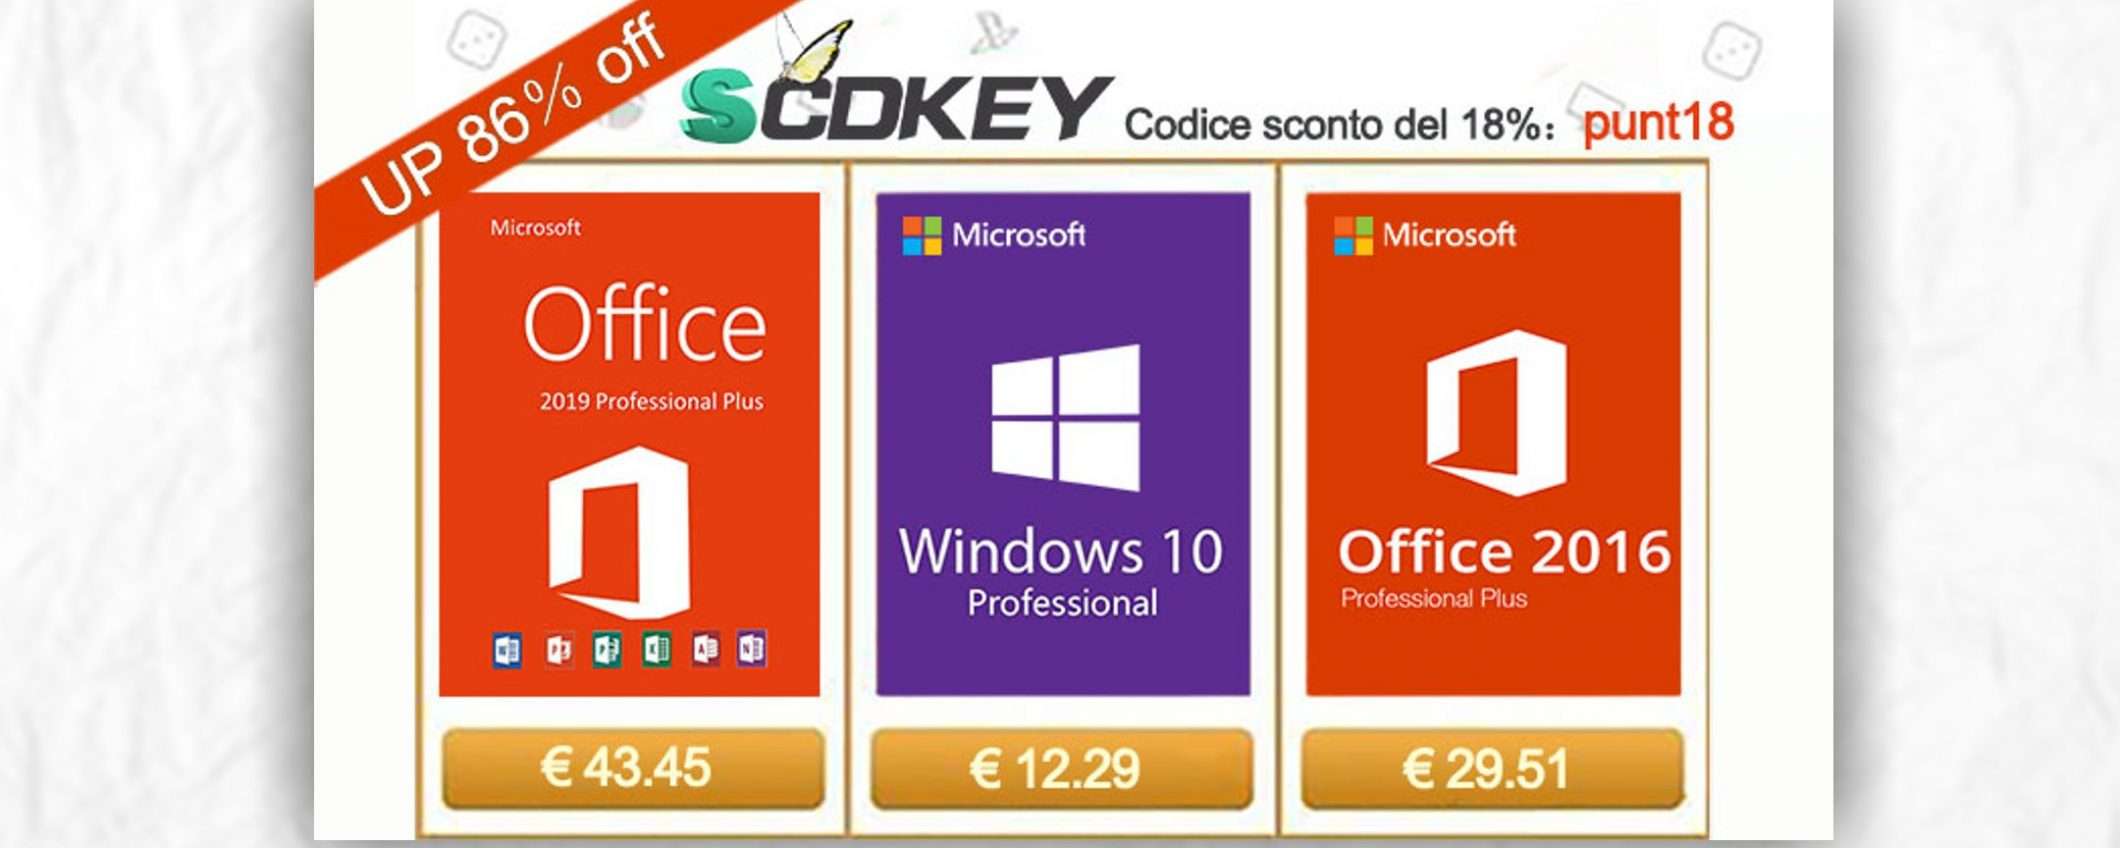 SCDKey: Windows 10 Pro 12€, Office 2019 Pro Plus 43€